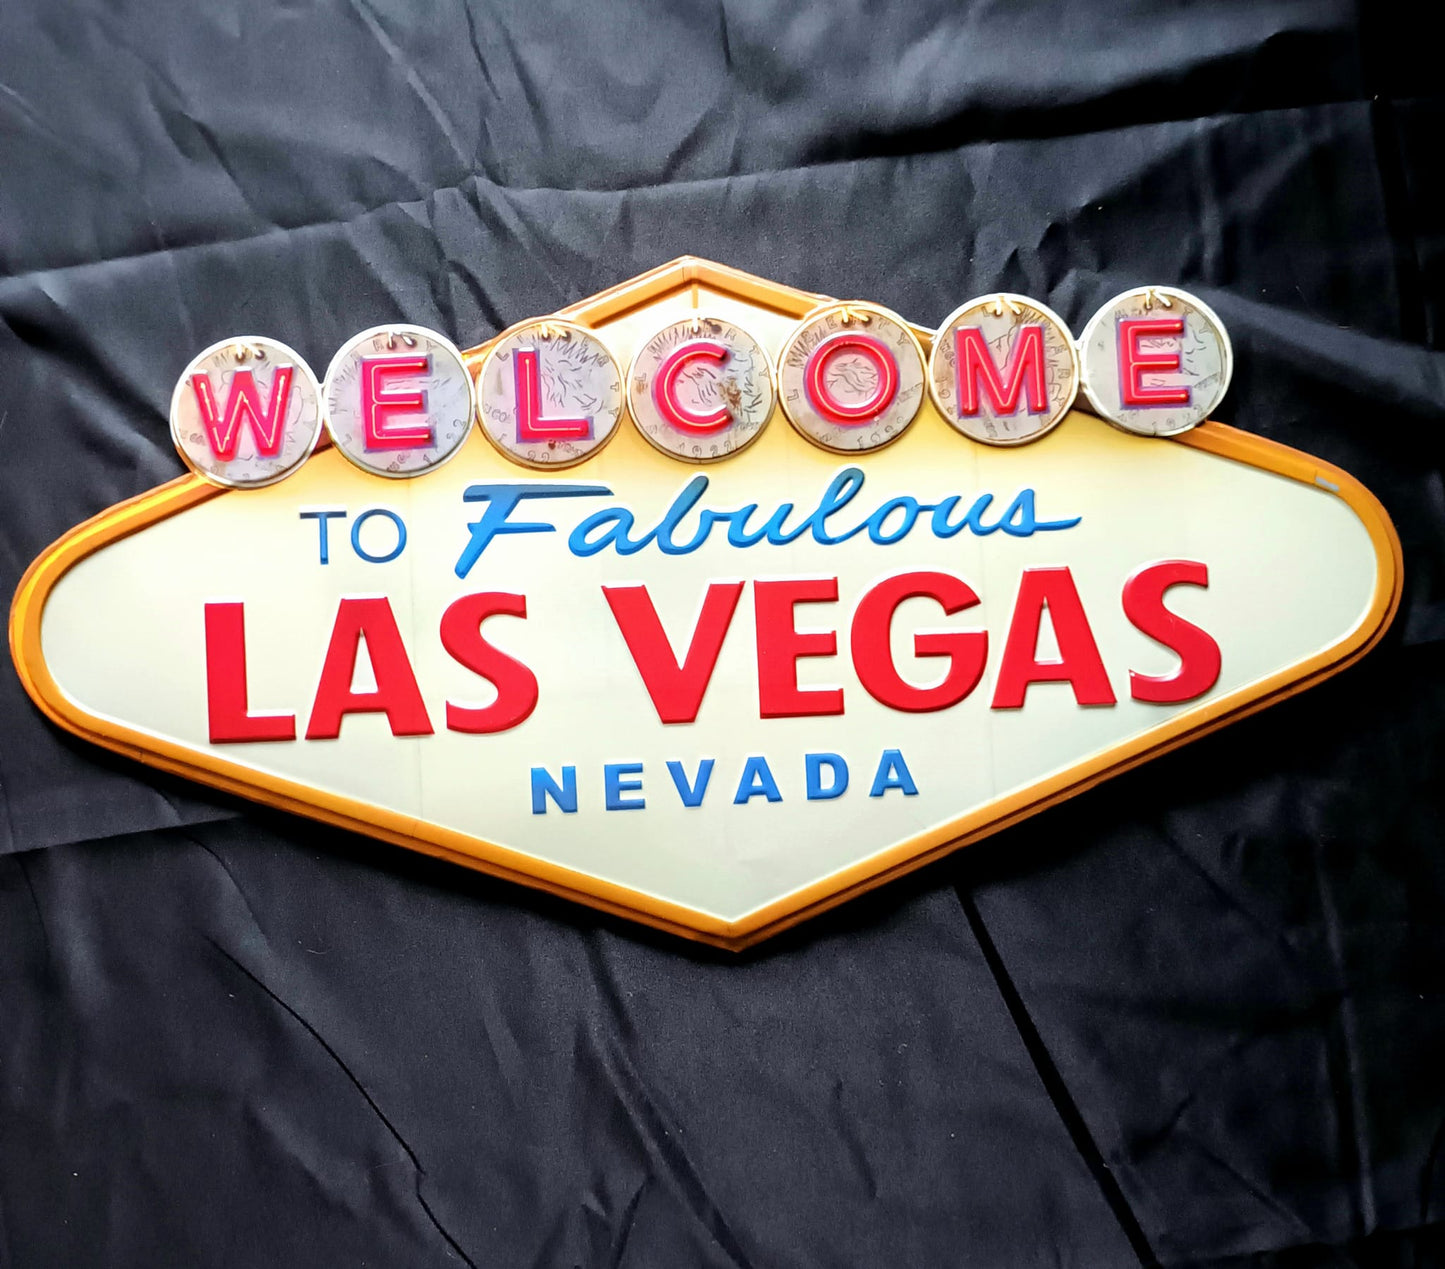 Blechschild "Welcome to Fabulous Las Vegas"